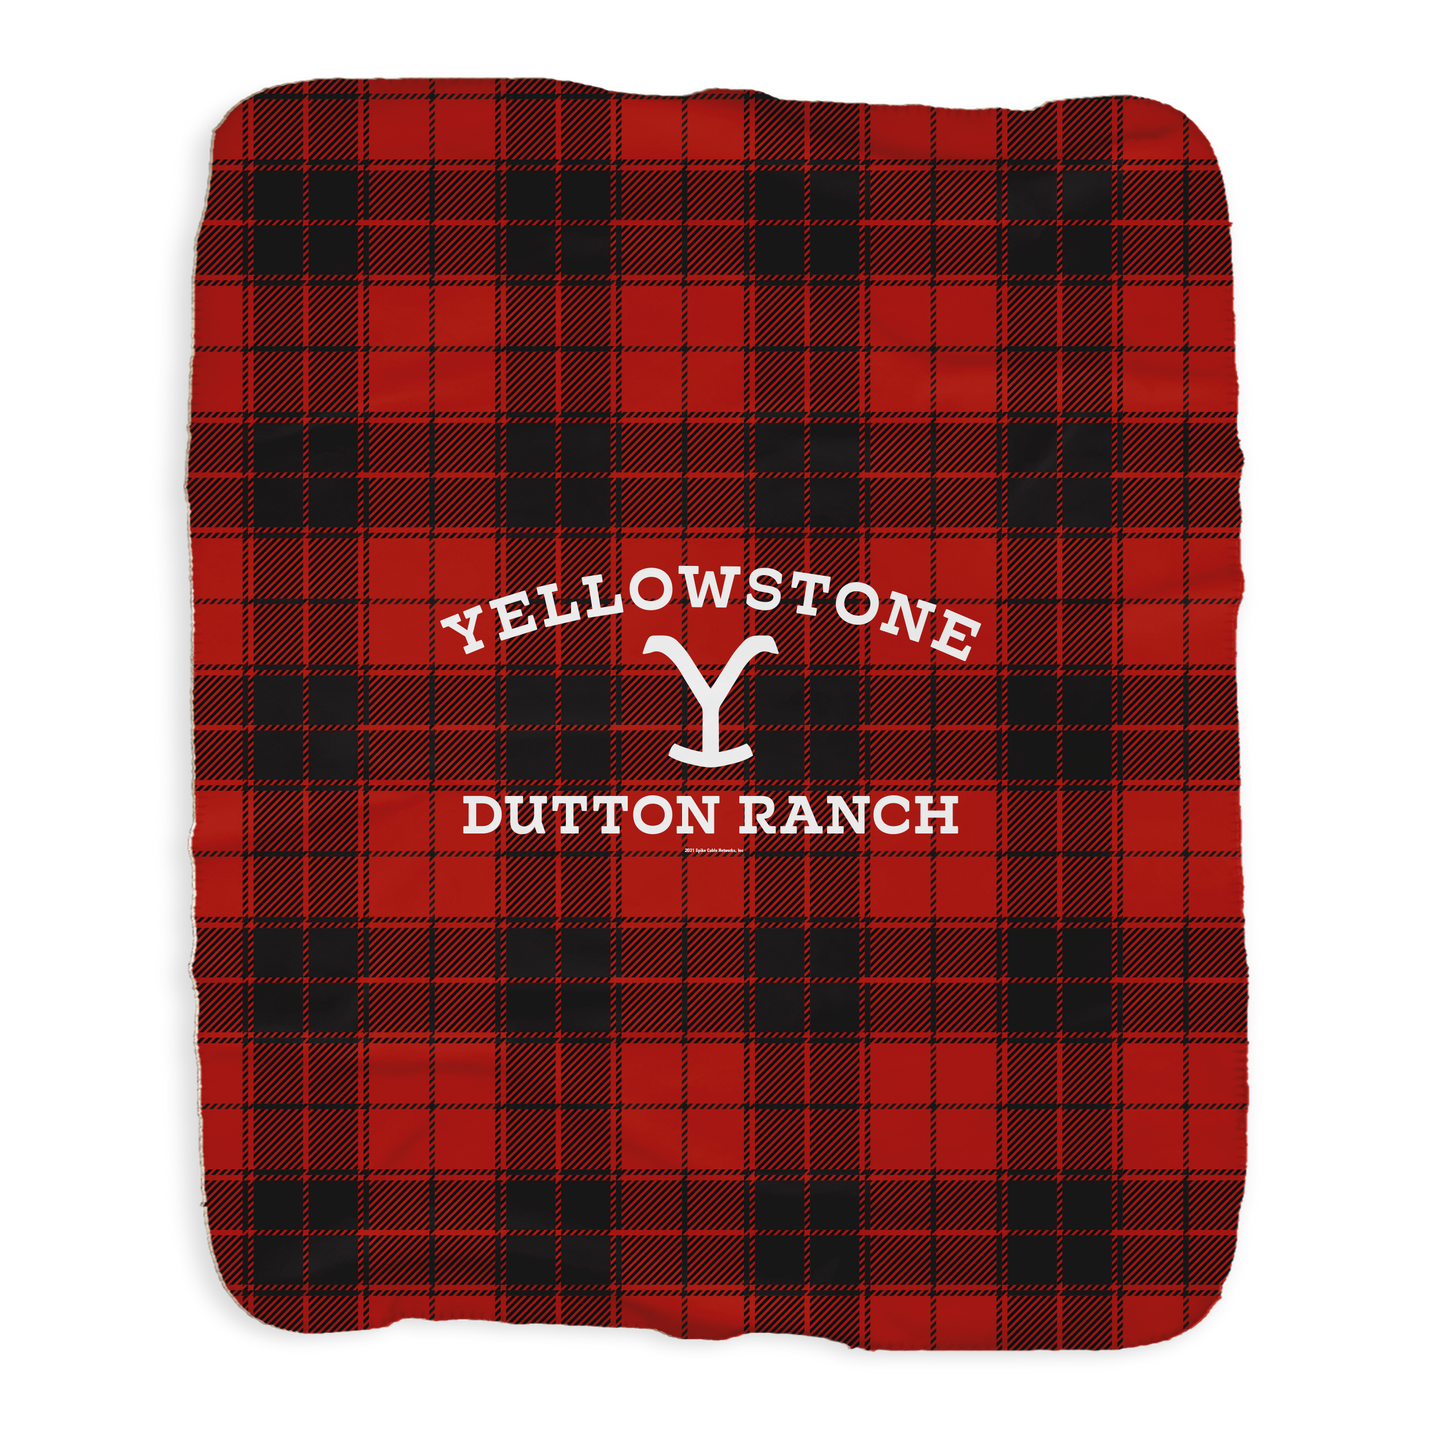 Yellowstone Dutton Ranch Plaid Sherpa Blanket